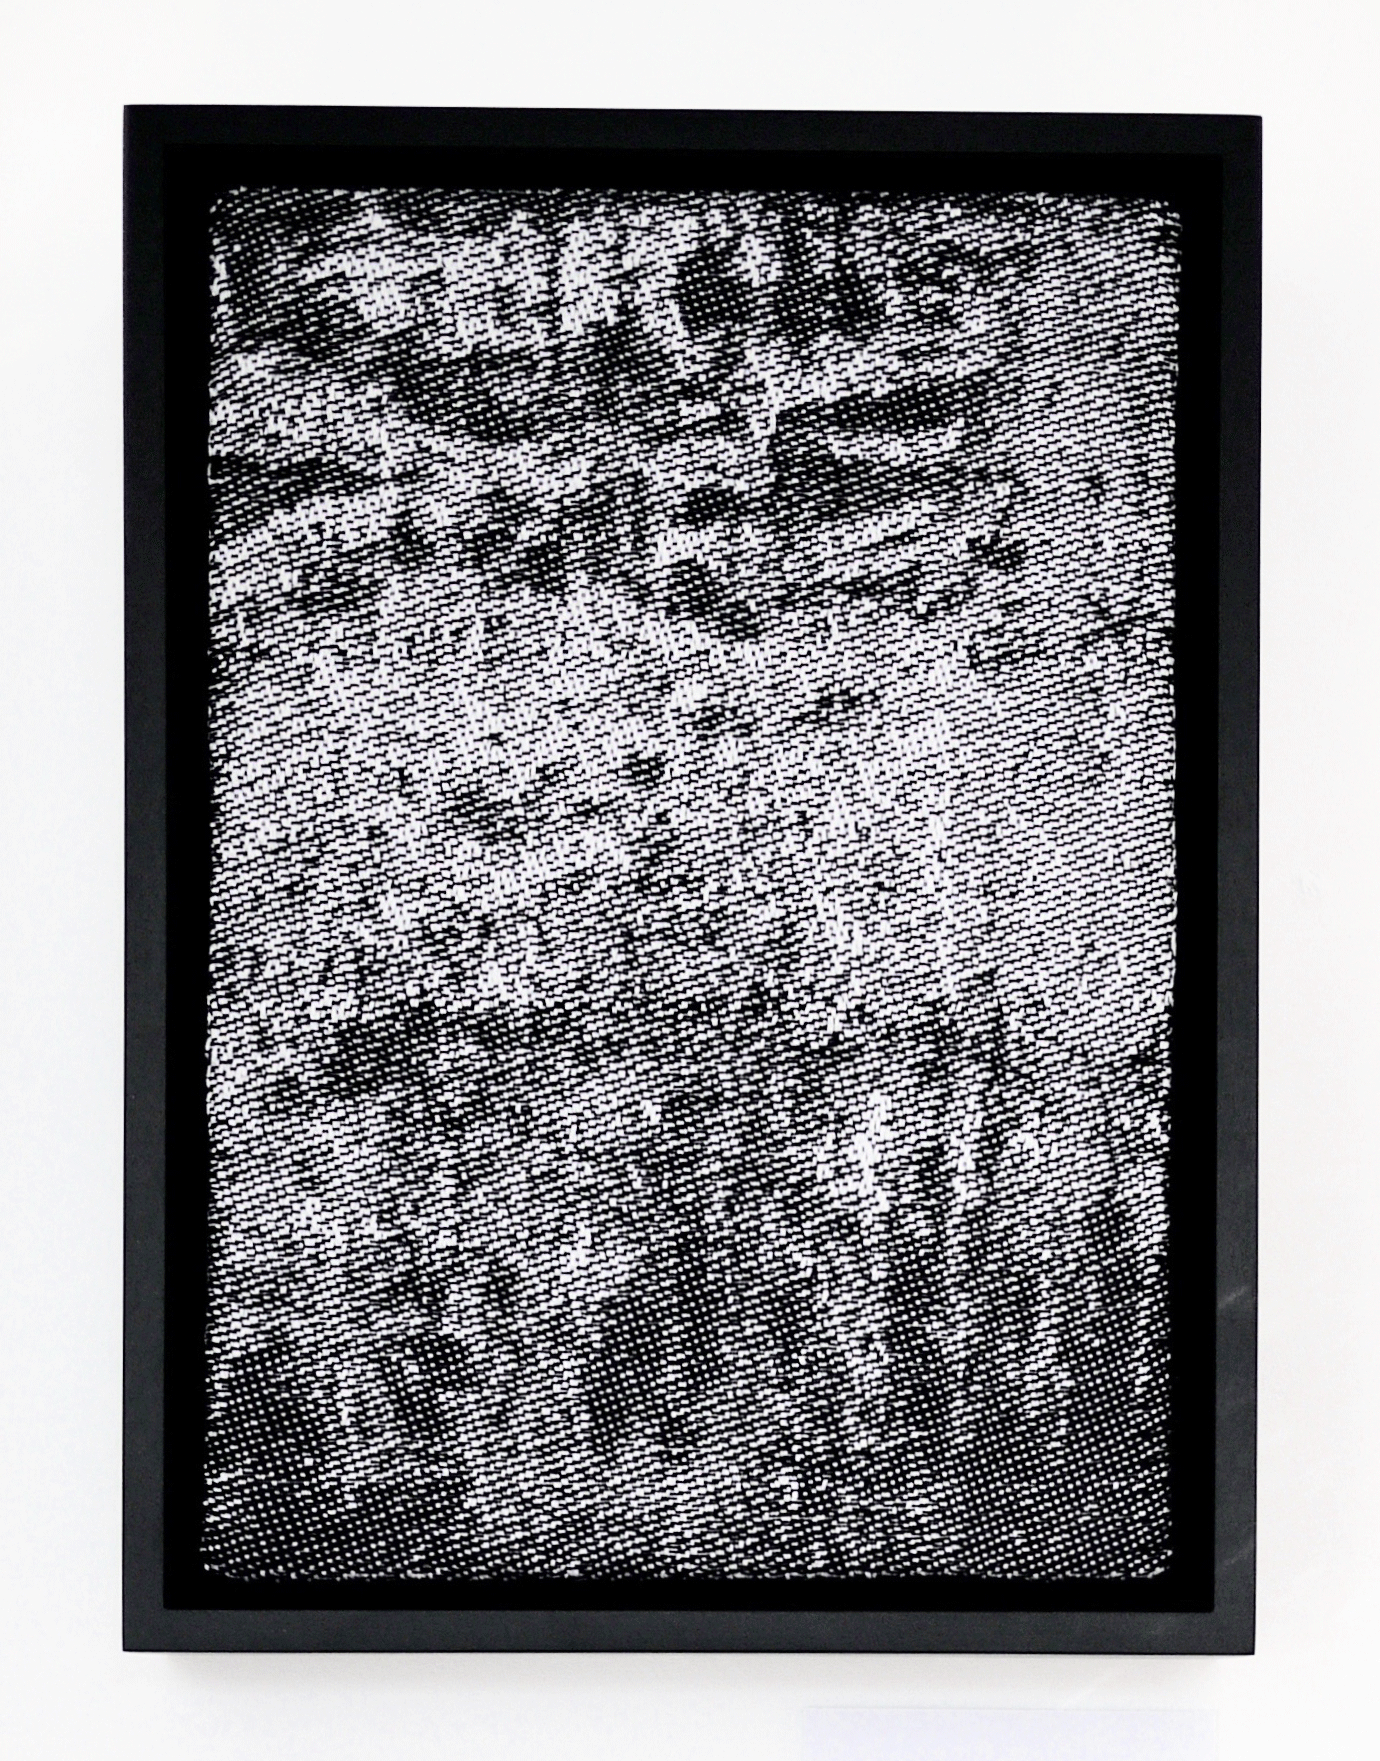 Sarah Comfort, Untitled (F(lossy)), 2010, electronic jacquard, 9"x12".